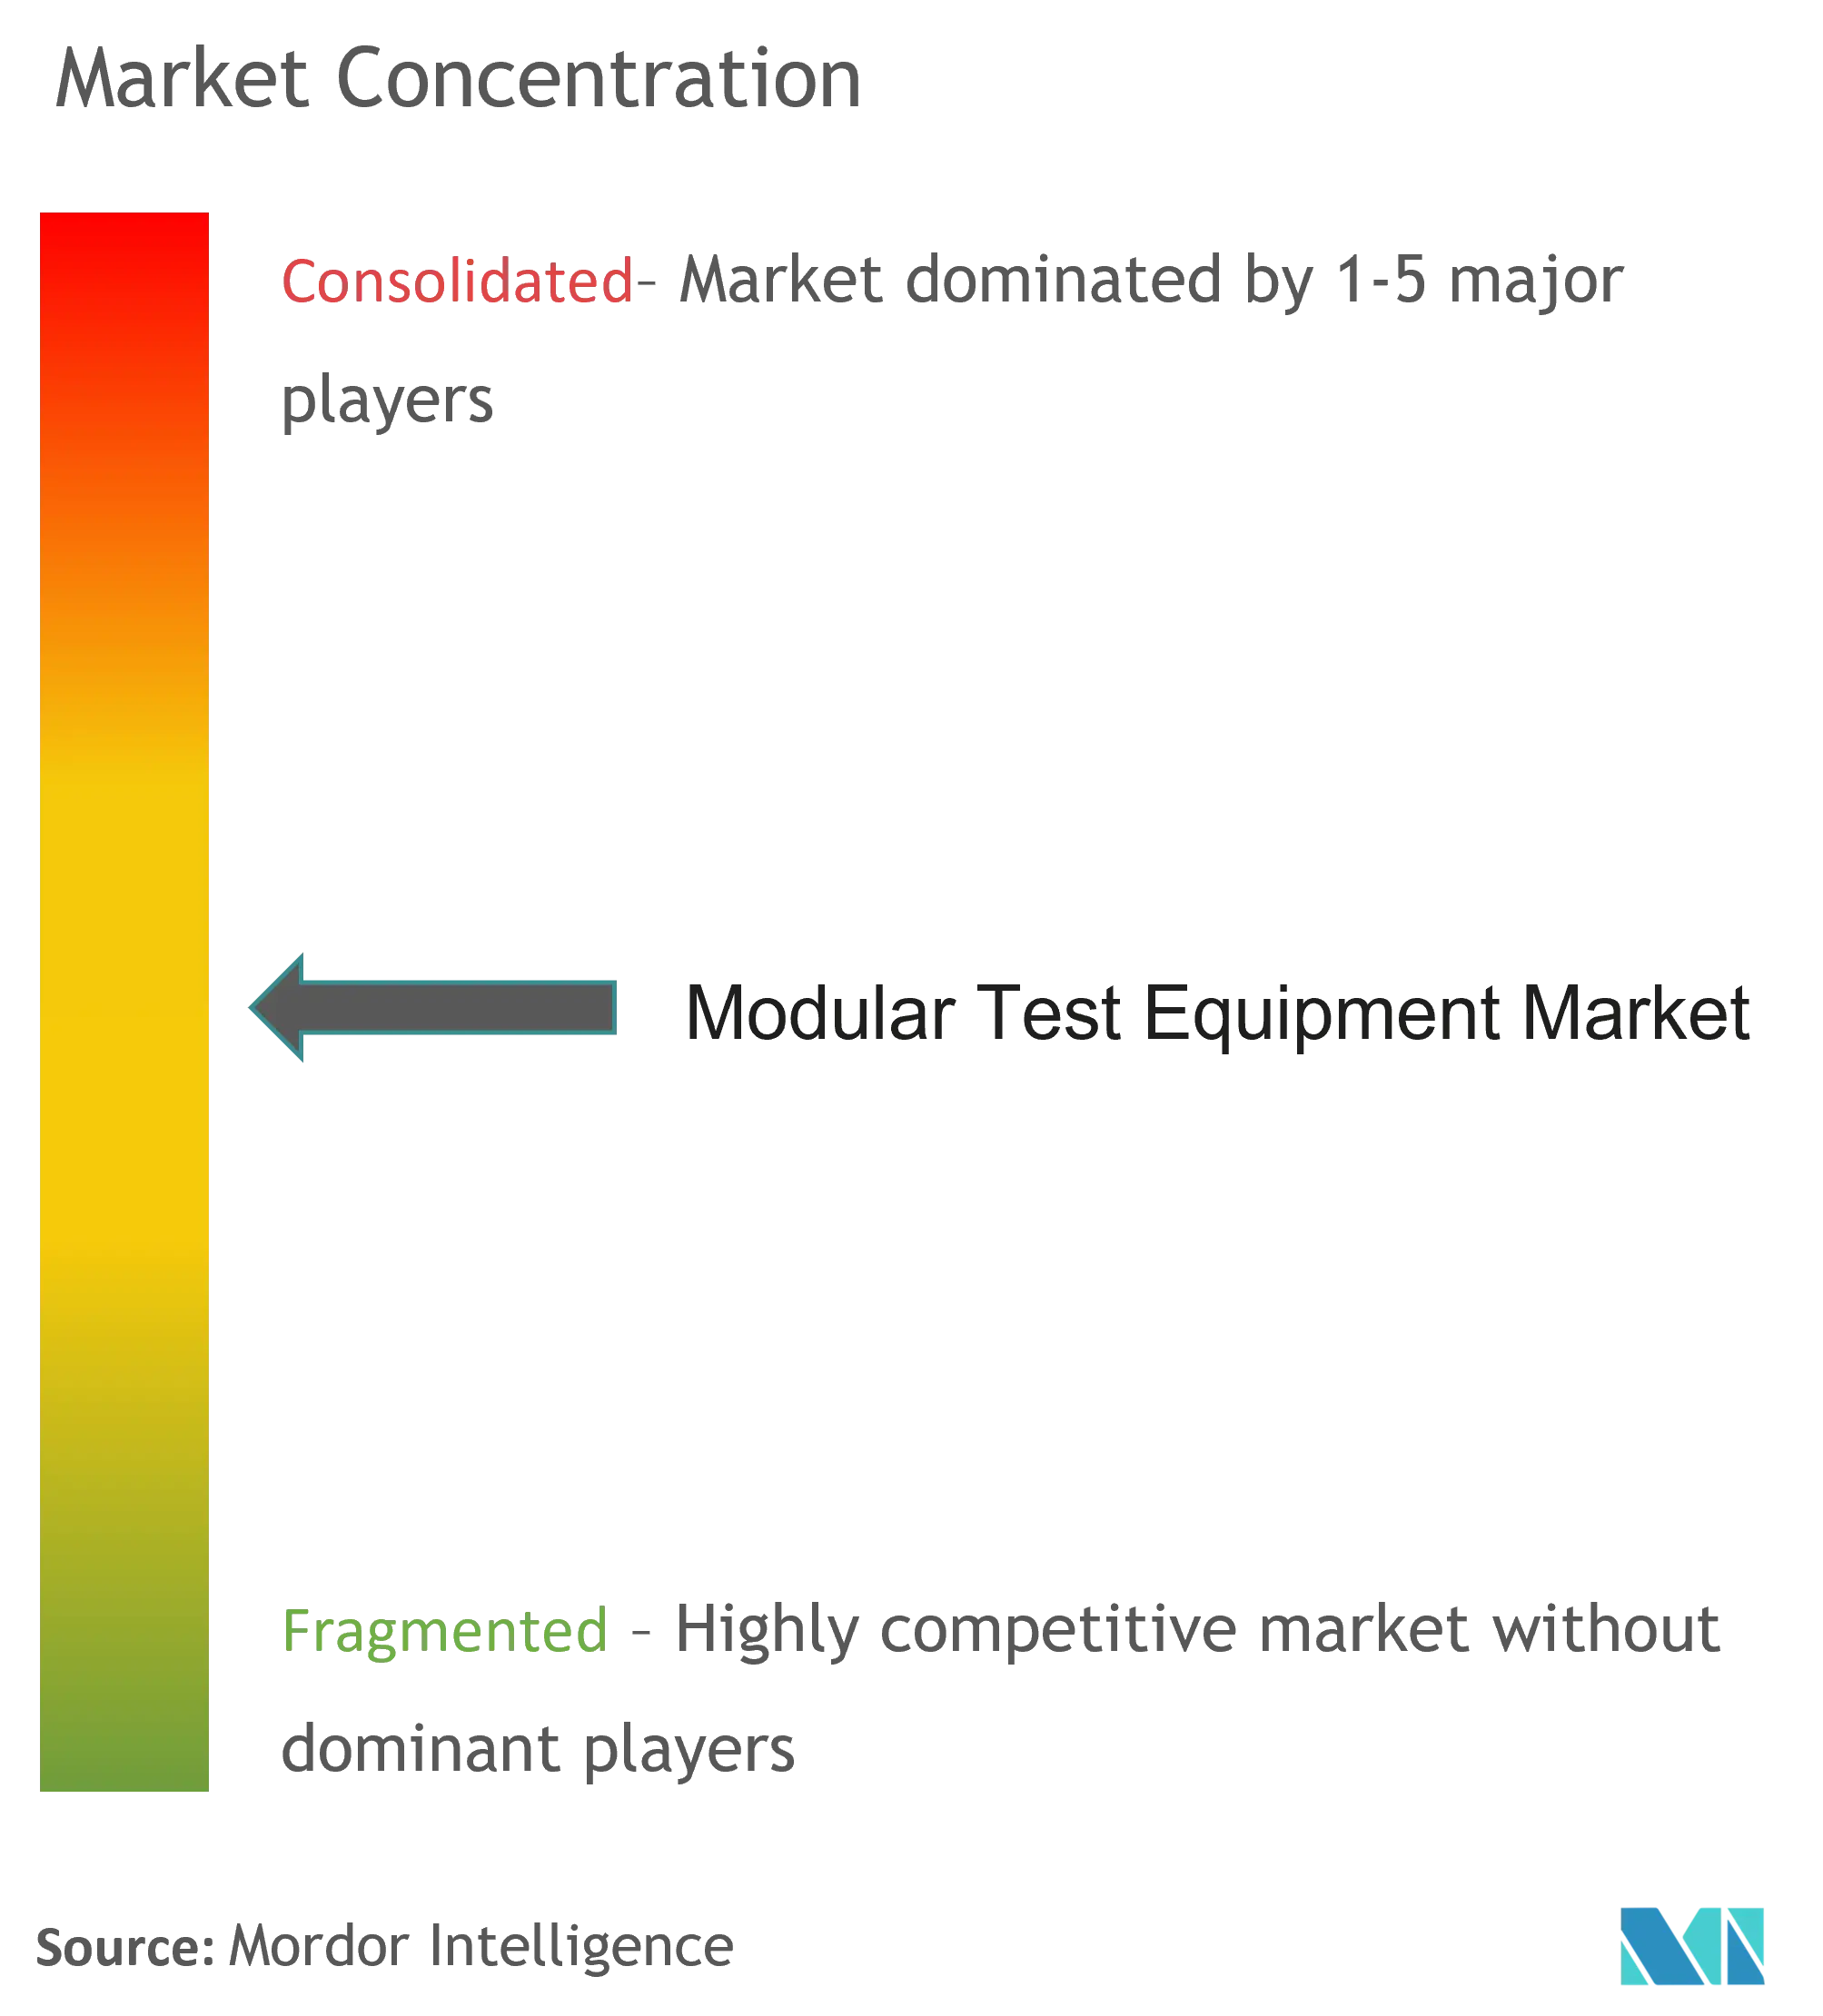 Modular Test Equipment Market Concentration